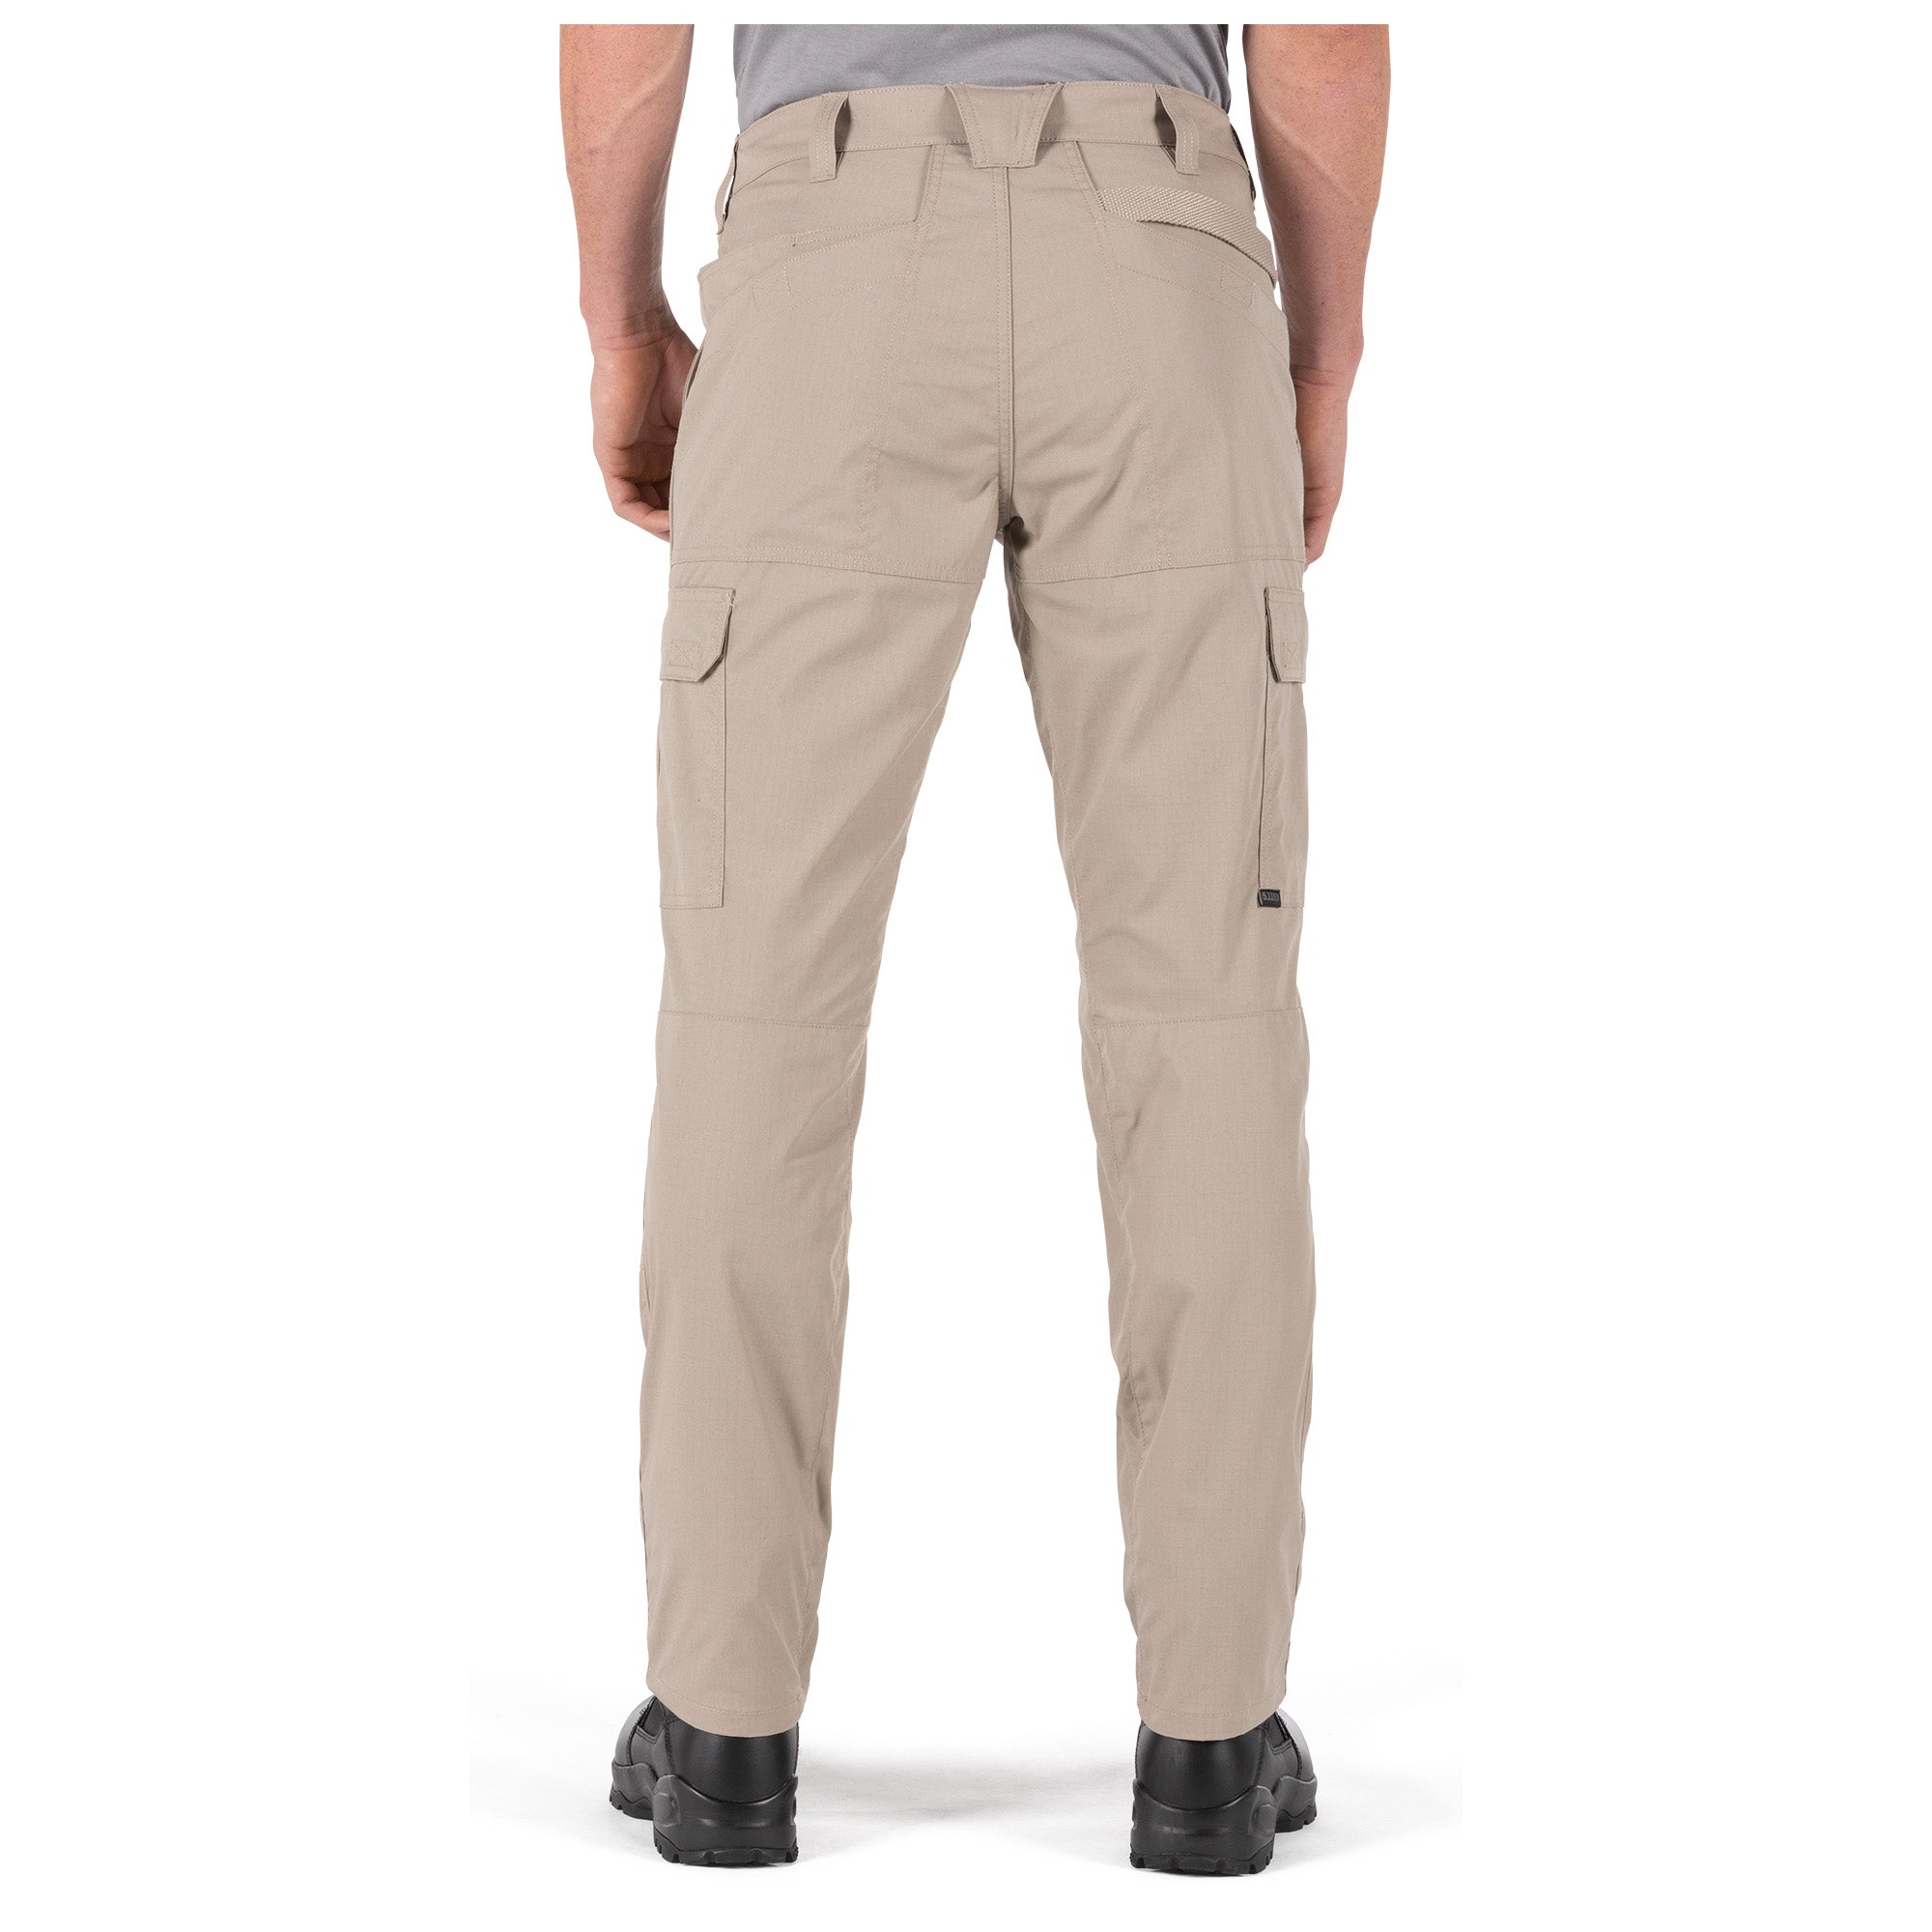 5.11 Tactical ABR Pro Pants - Khaki